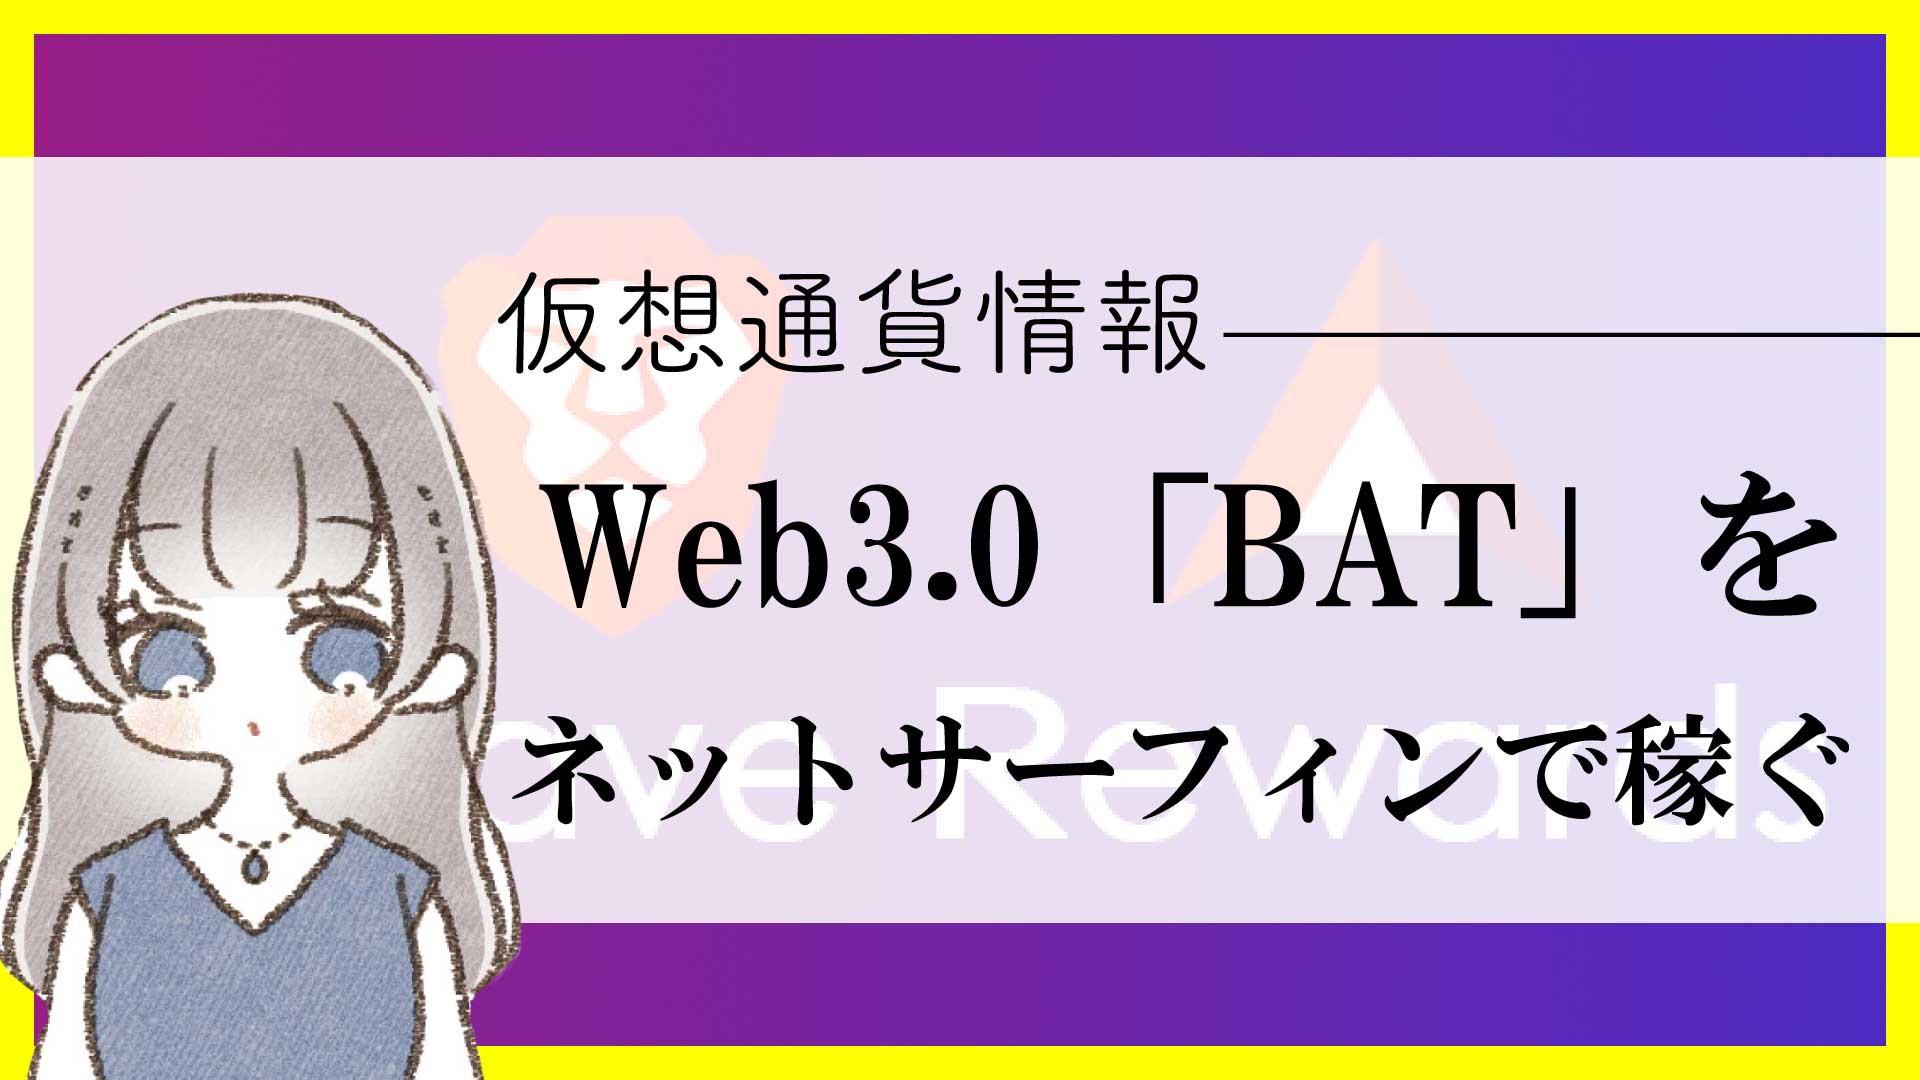 Web3.0銘柄「BATトークン」が無料で稼げるブラウザアプリBraveの始め方